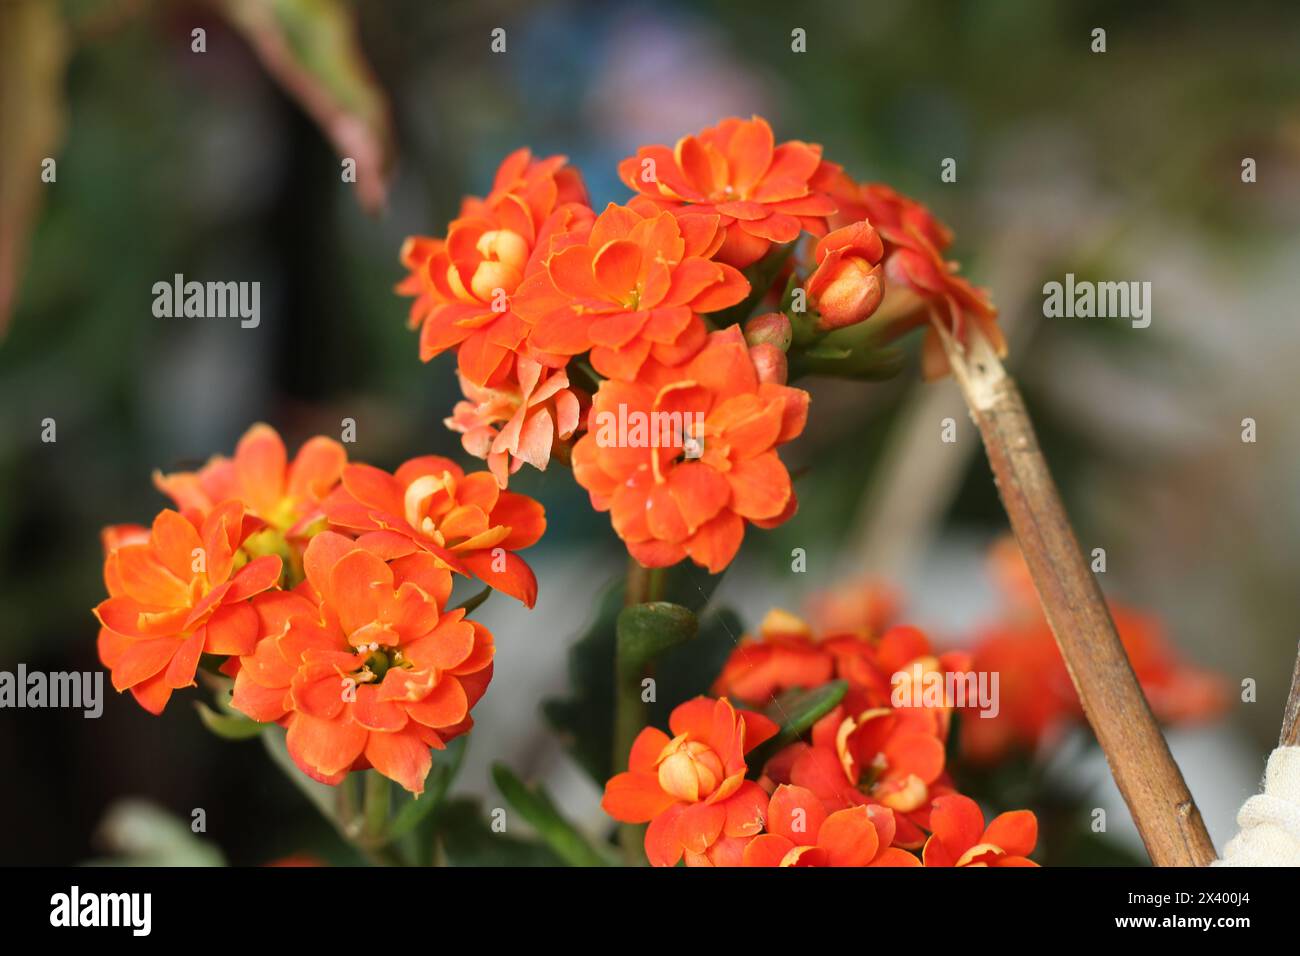 Flowering orange kalanchoe flower in garden. Stock Photo